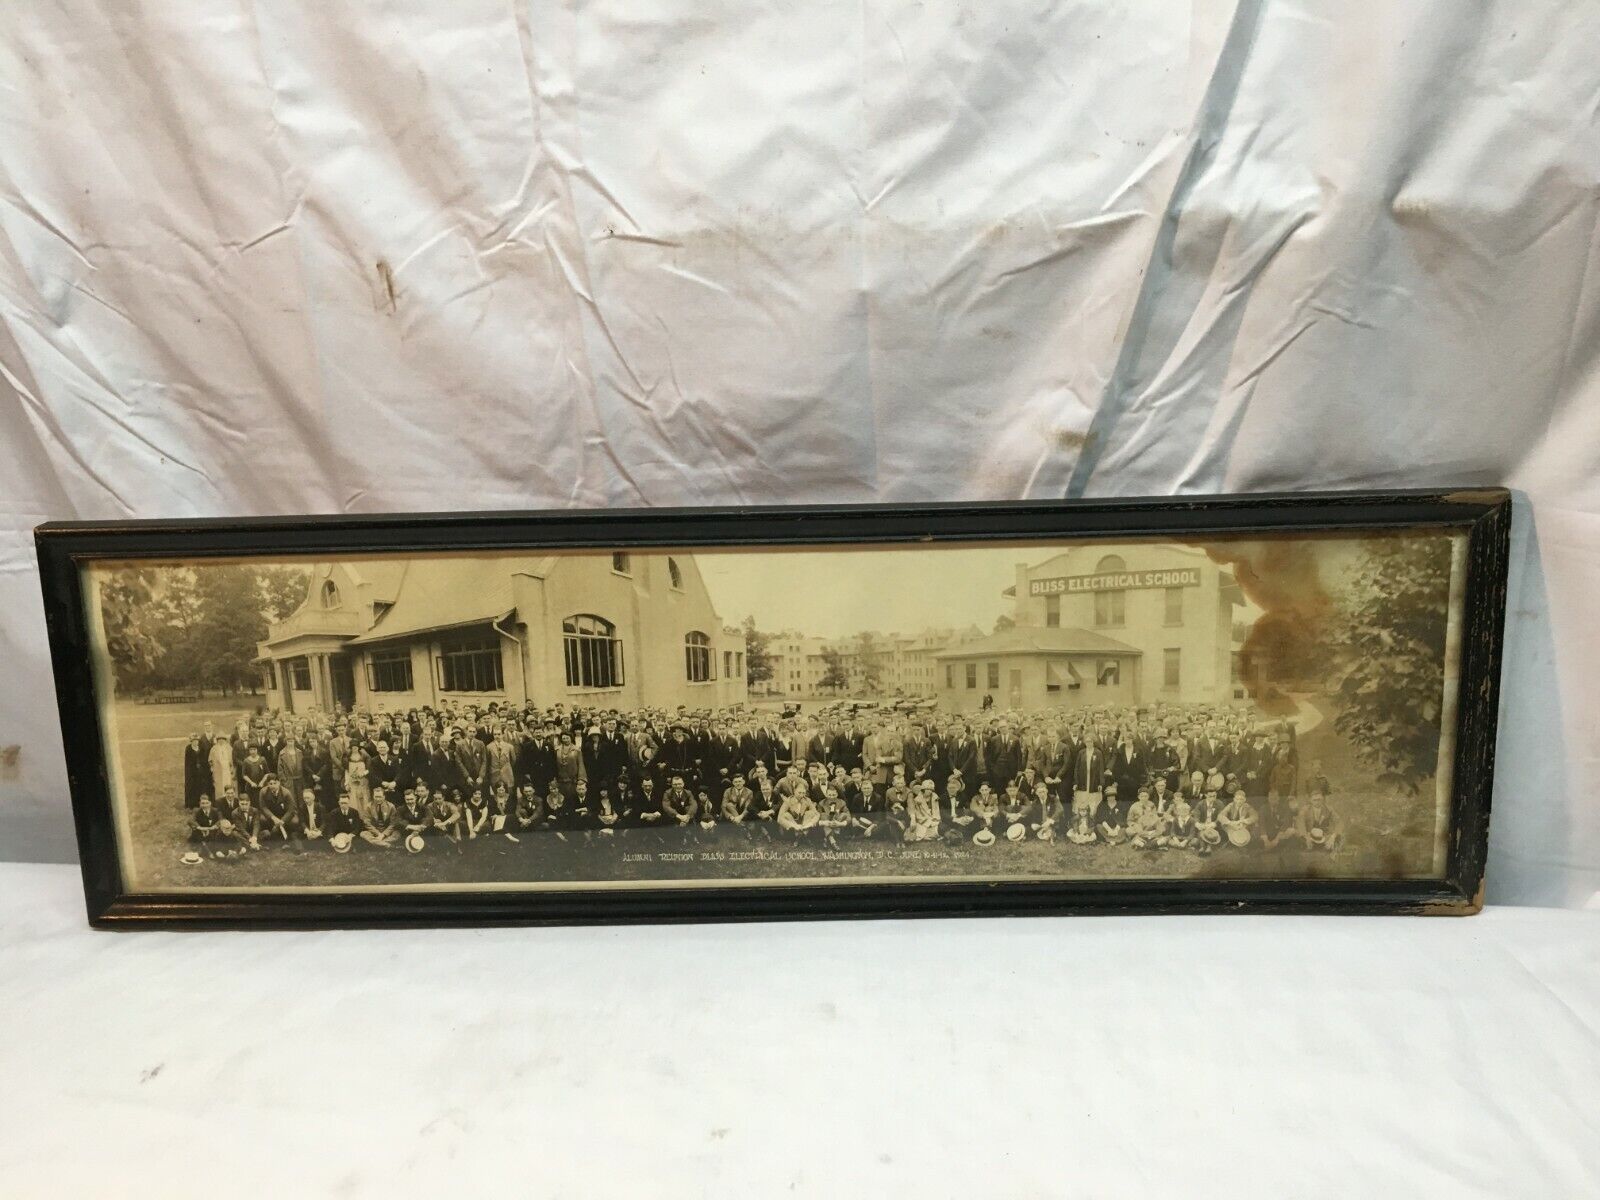 The Bliss Electrical School Photo In Frame Washington D.C. 1924 Alumni Reunion